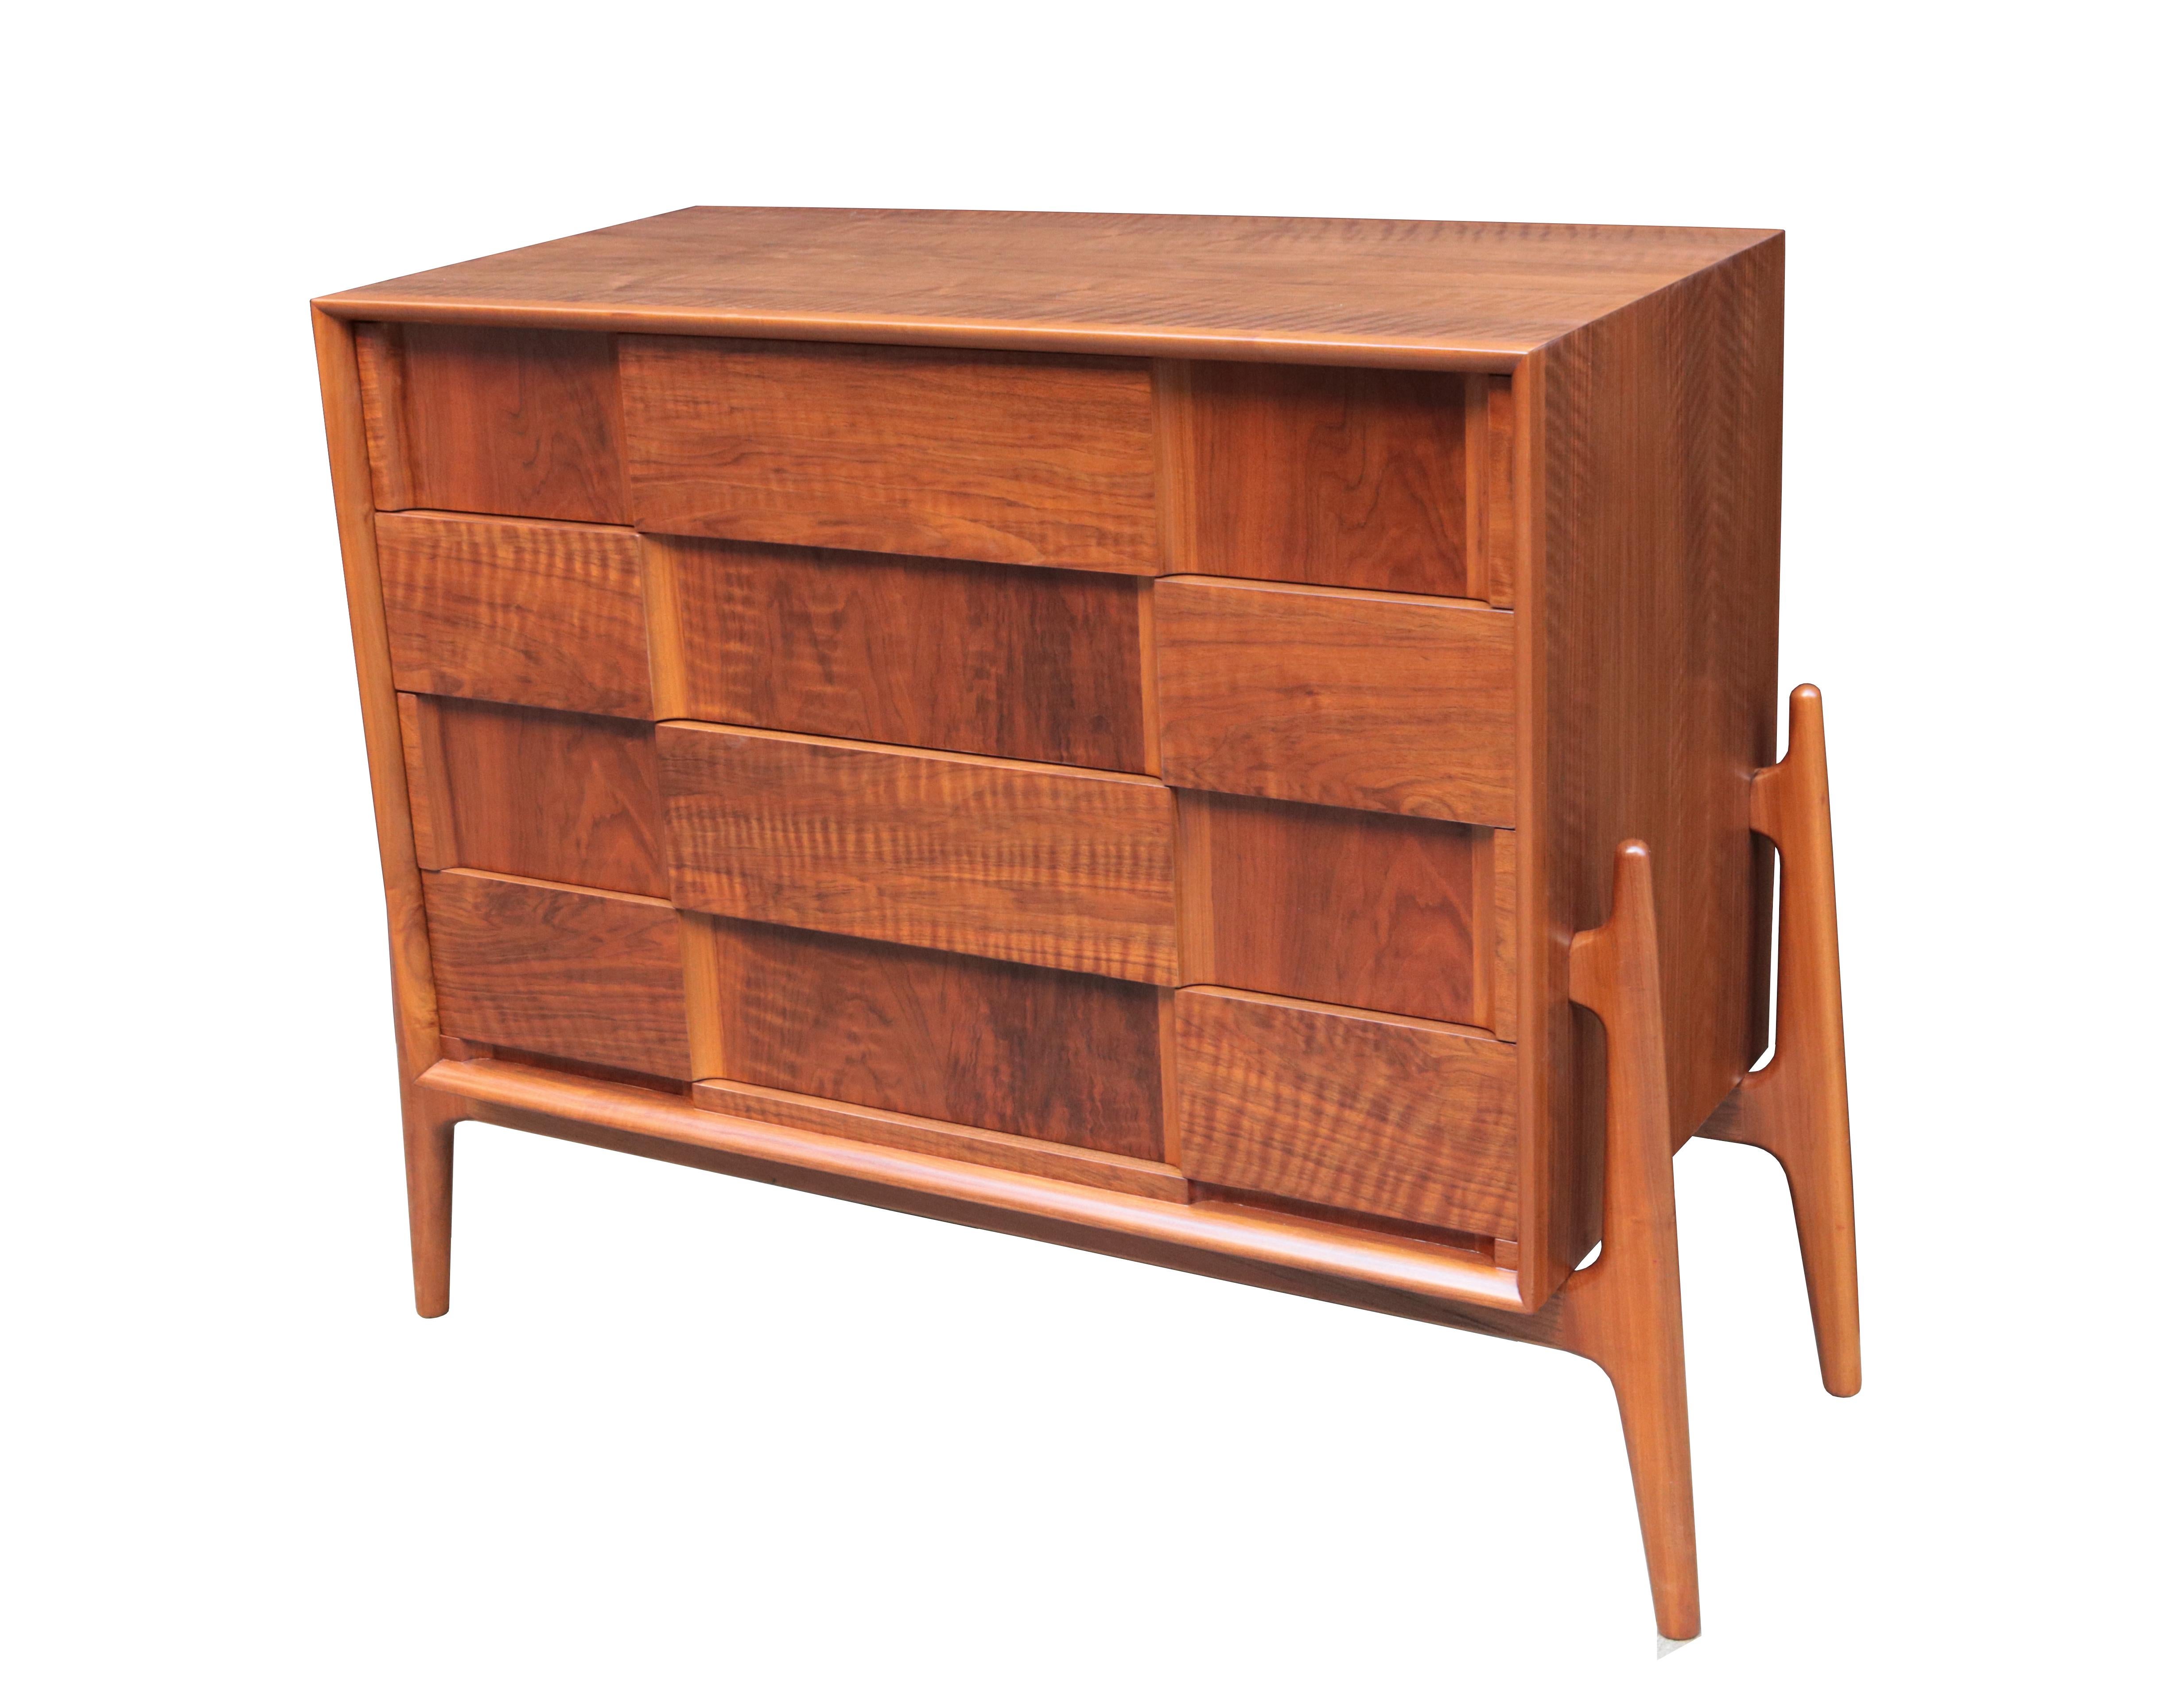 A Danish modern chest of drawers in teak.
Designed by Jørgen Clausen for Brande Møbelfabrik.